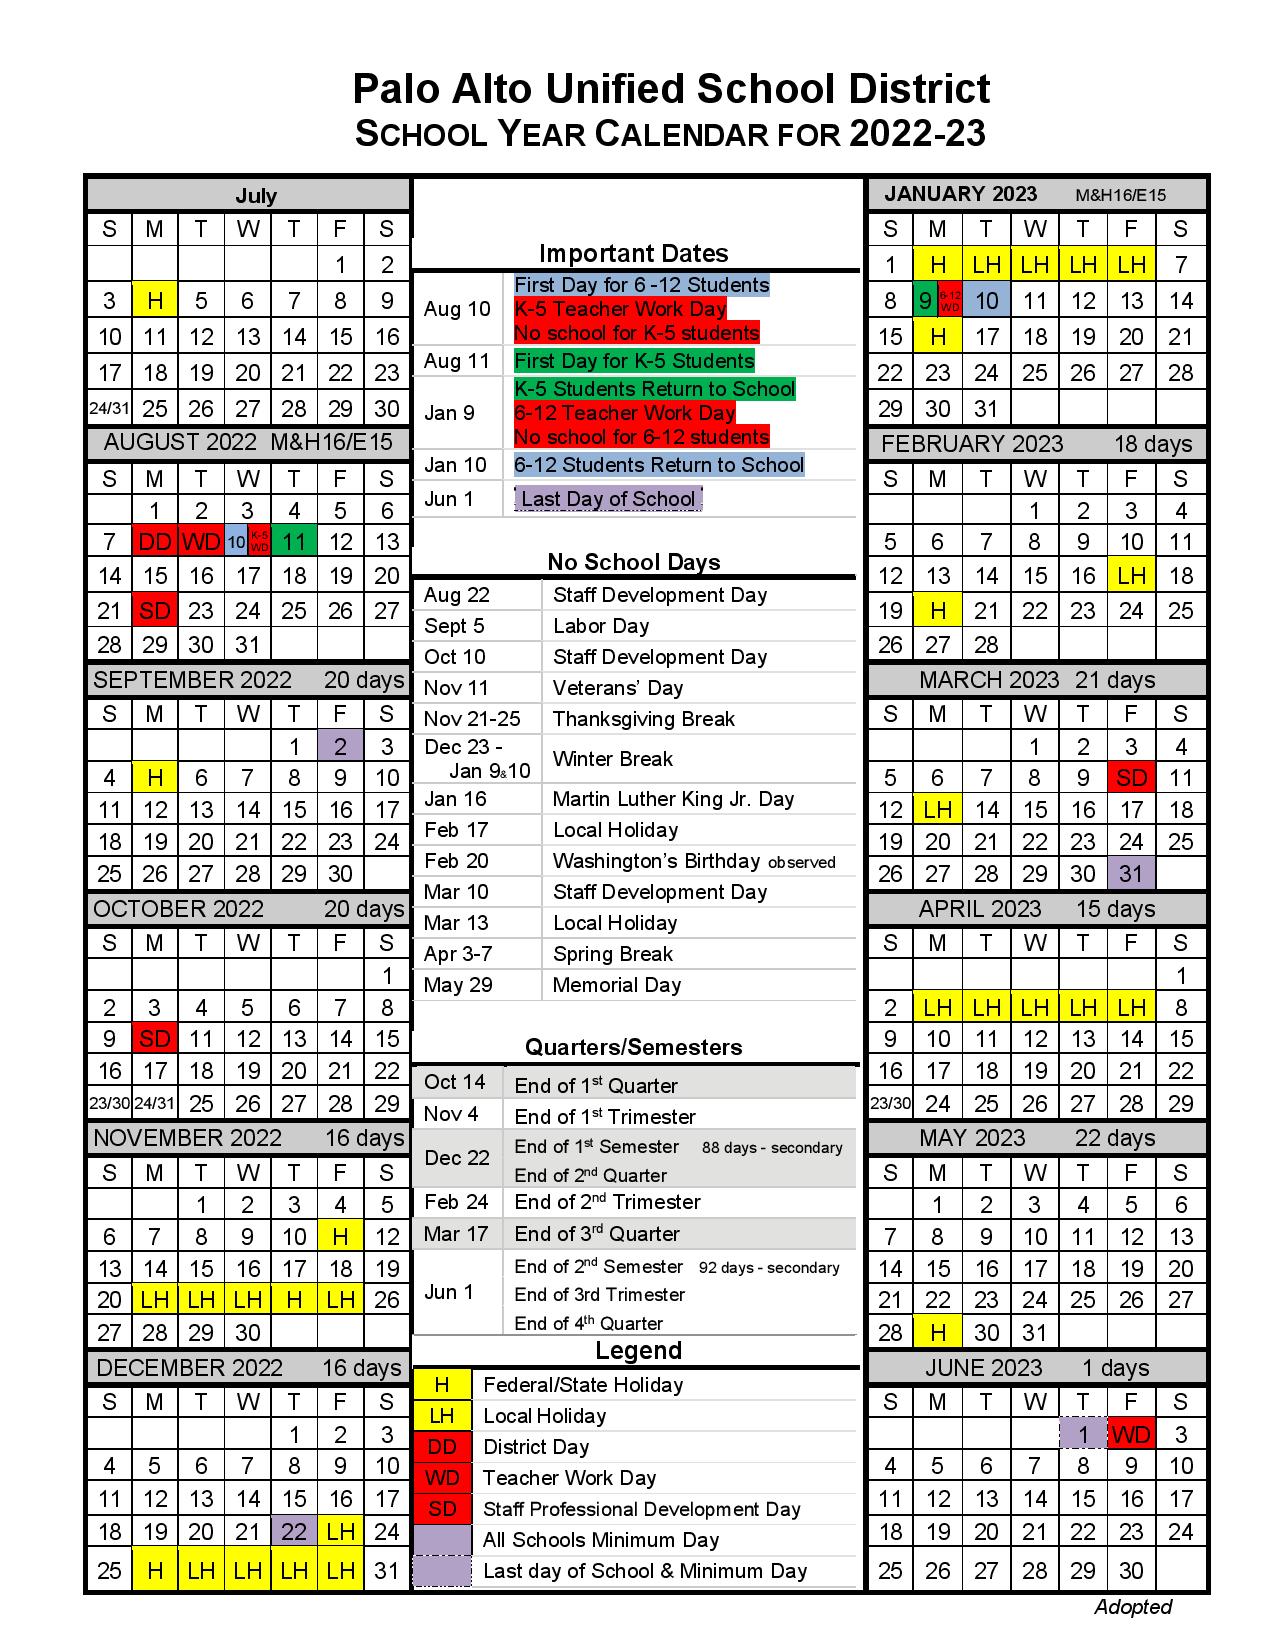 Palo Alto Unified School District Calendar 20222023